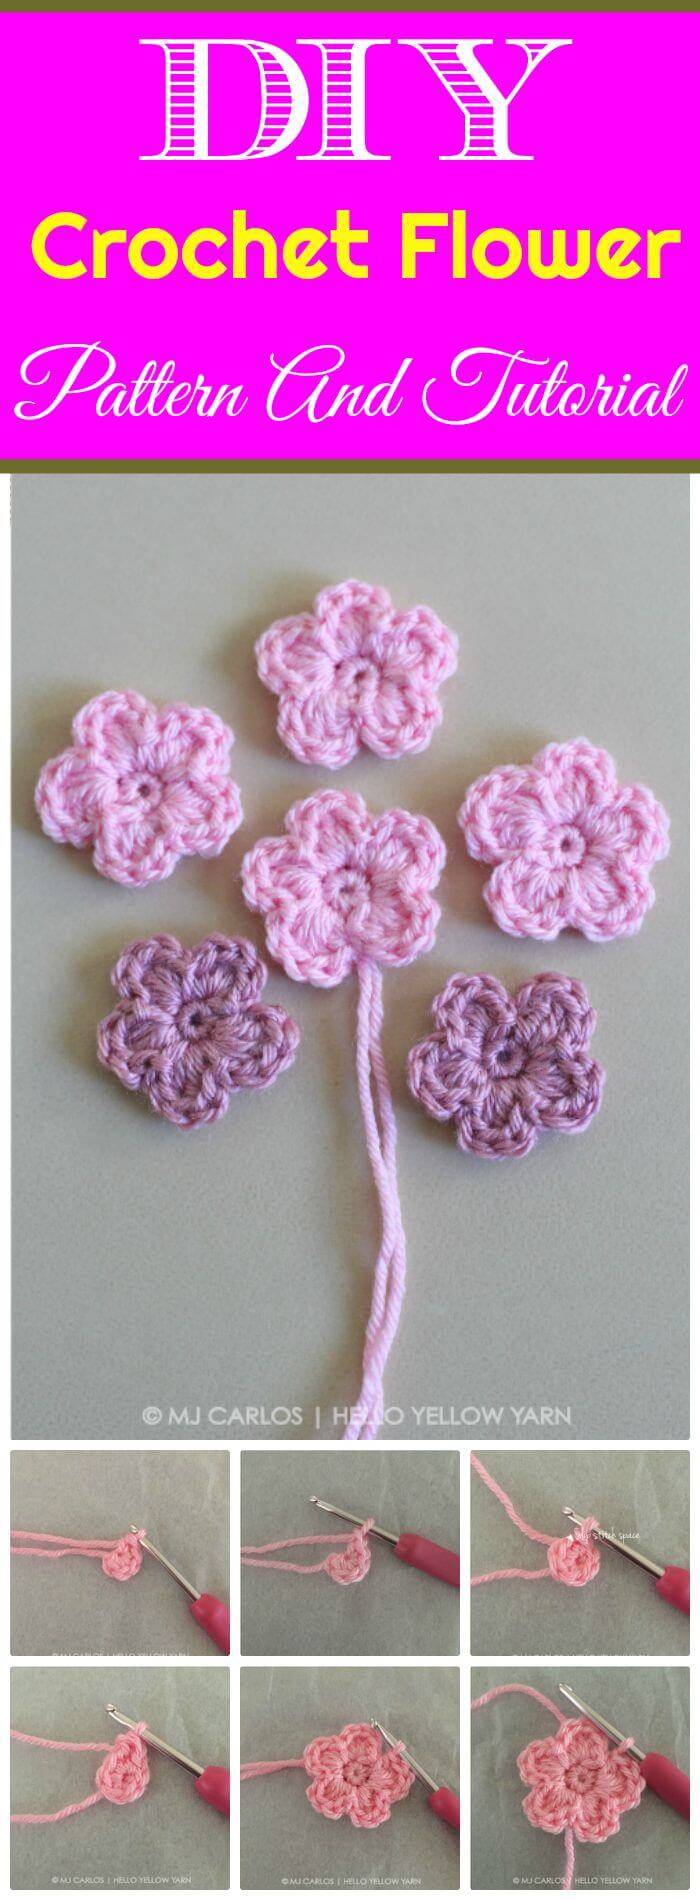 Crochet Flowers 90 Free Crochet Flower Patterns Diy Crafts